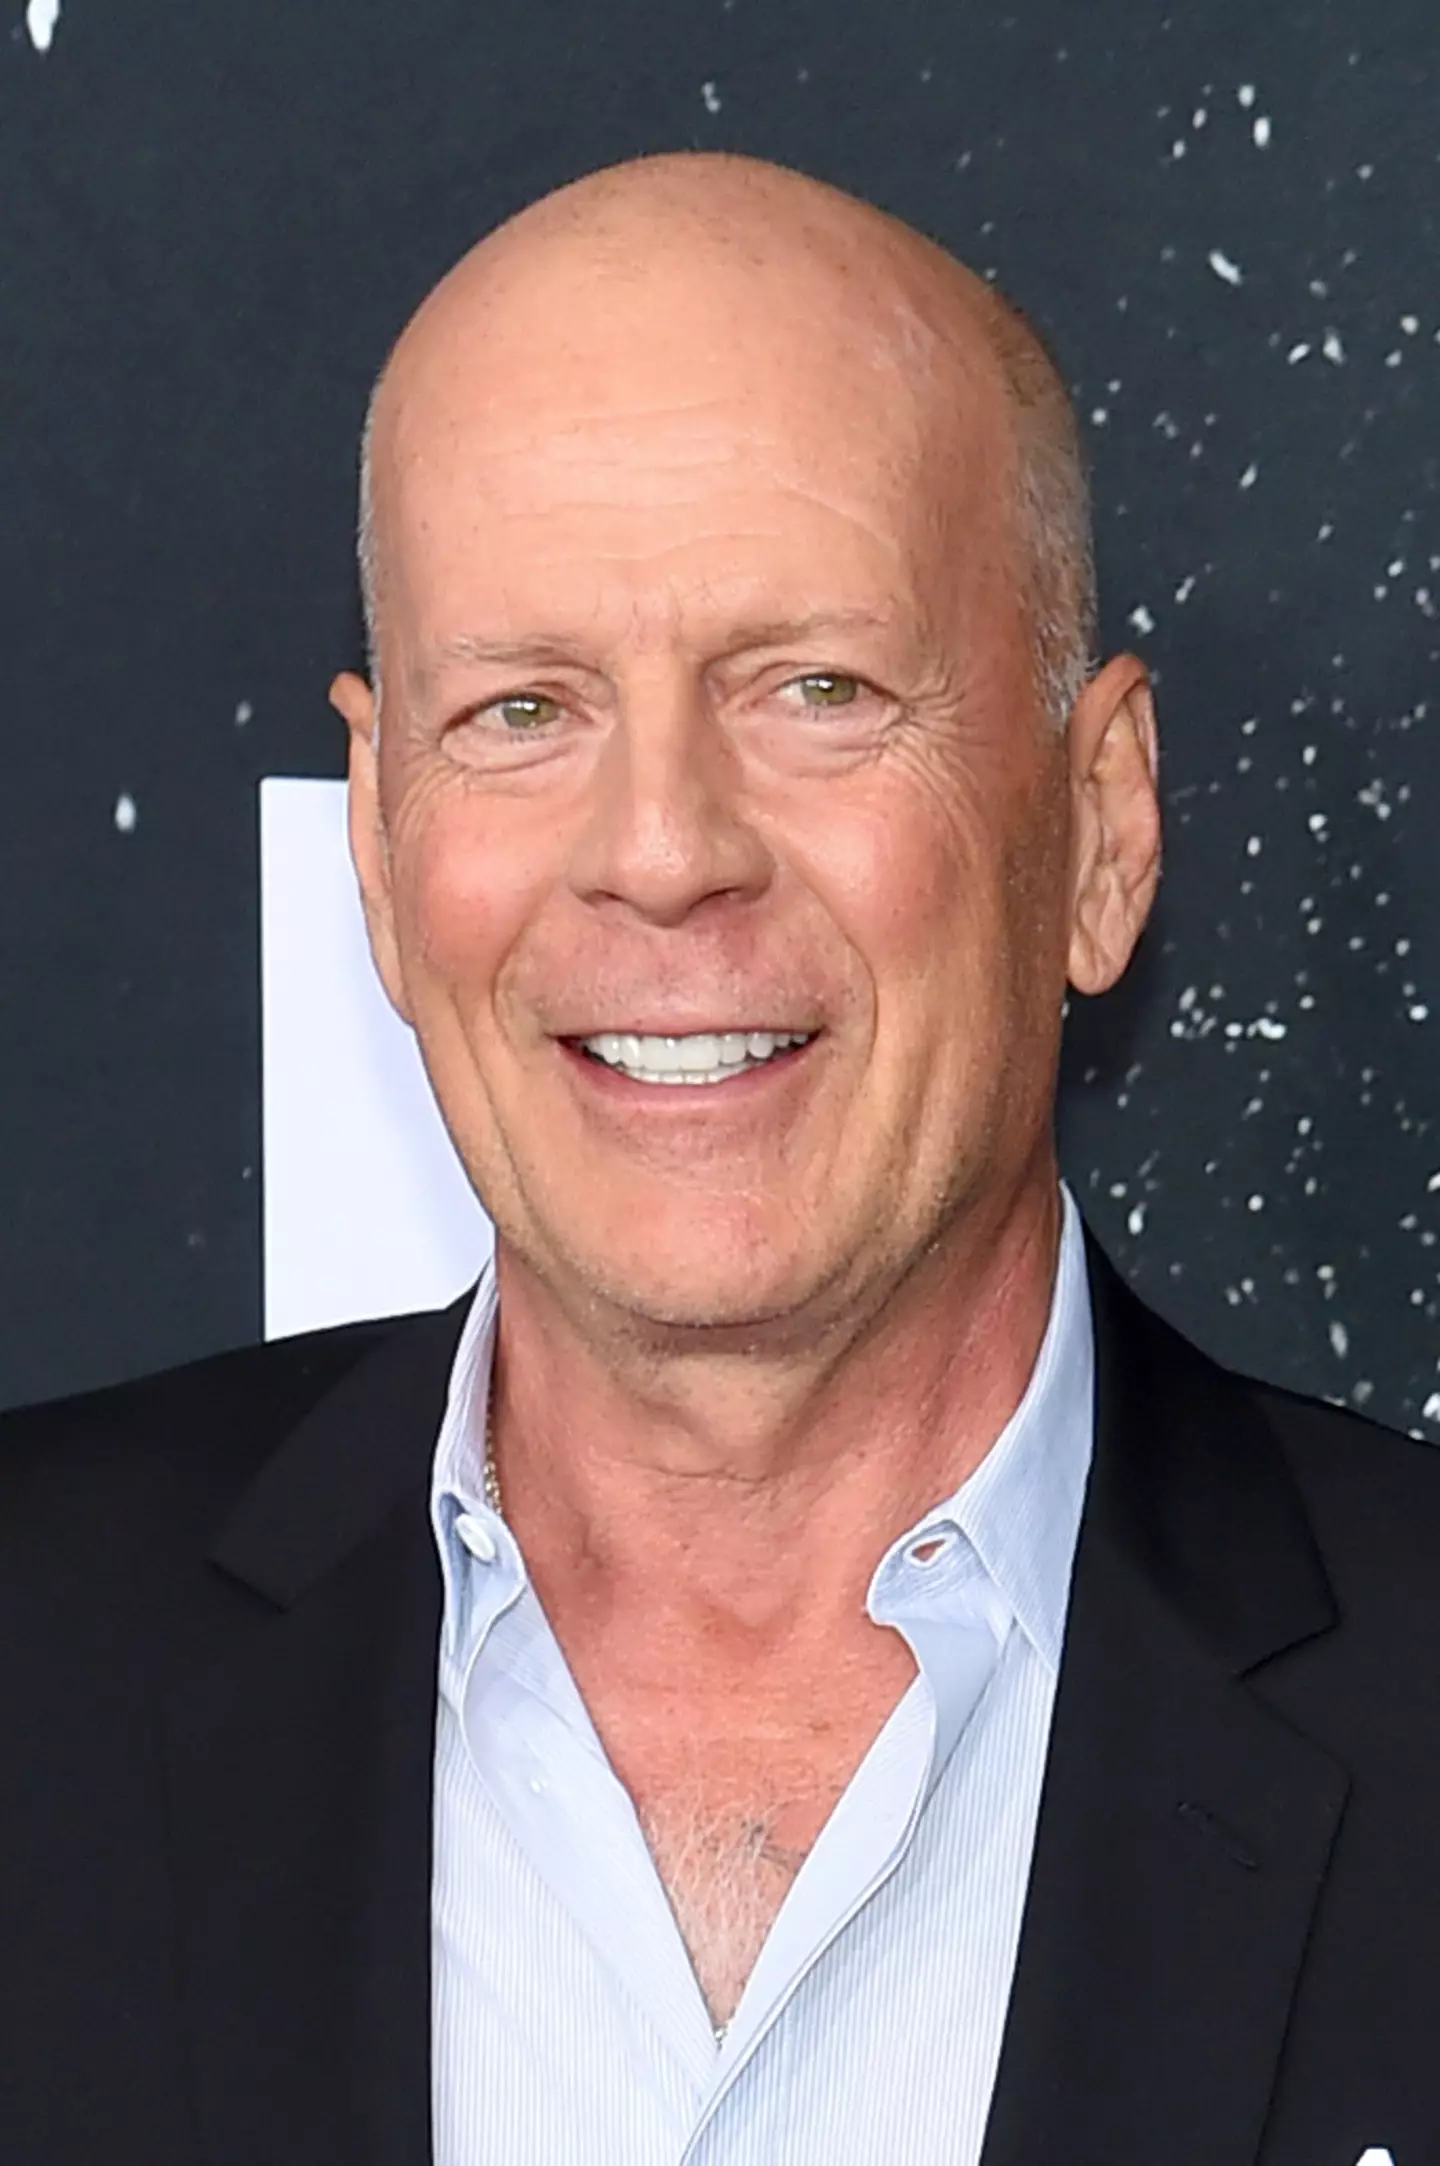 Bruce Willis and Glenn Gordon Caron worked together on Moonlighting.